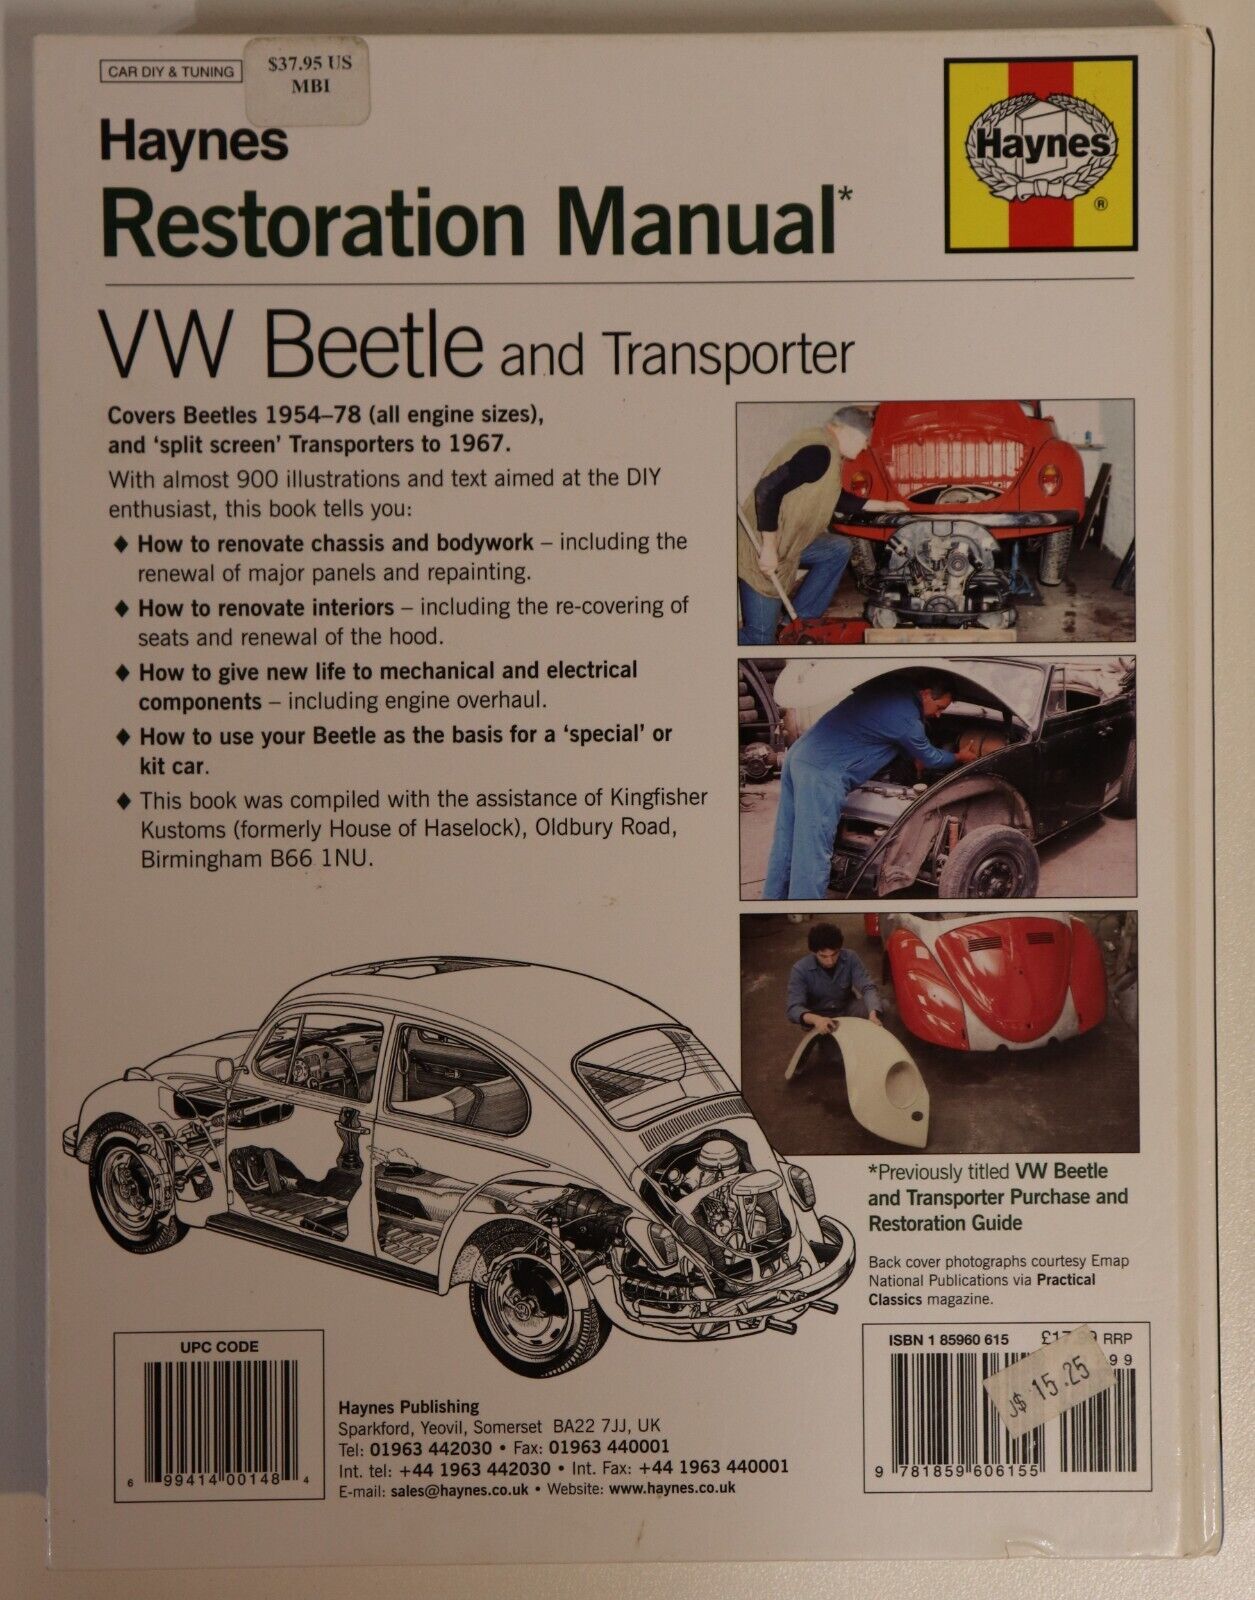 Haynes Restoration Manual VW Beetle & Transporter - 2005 - Automotive Book